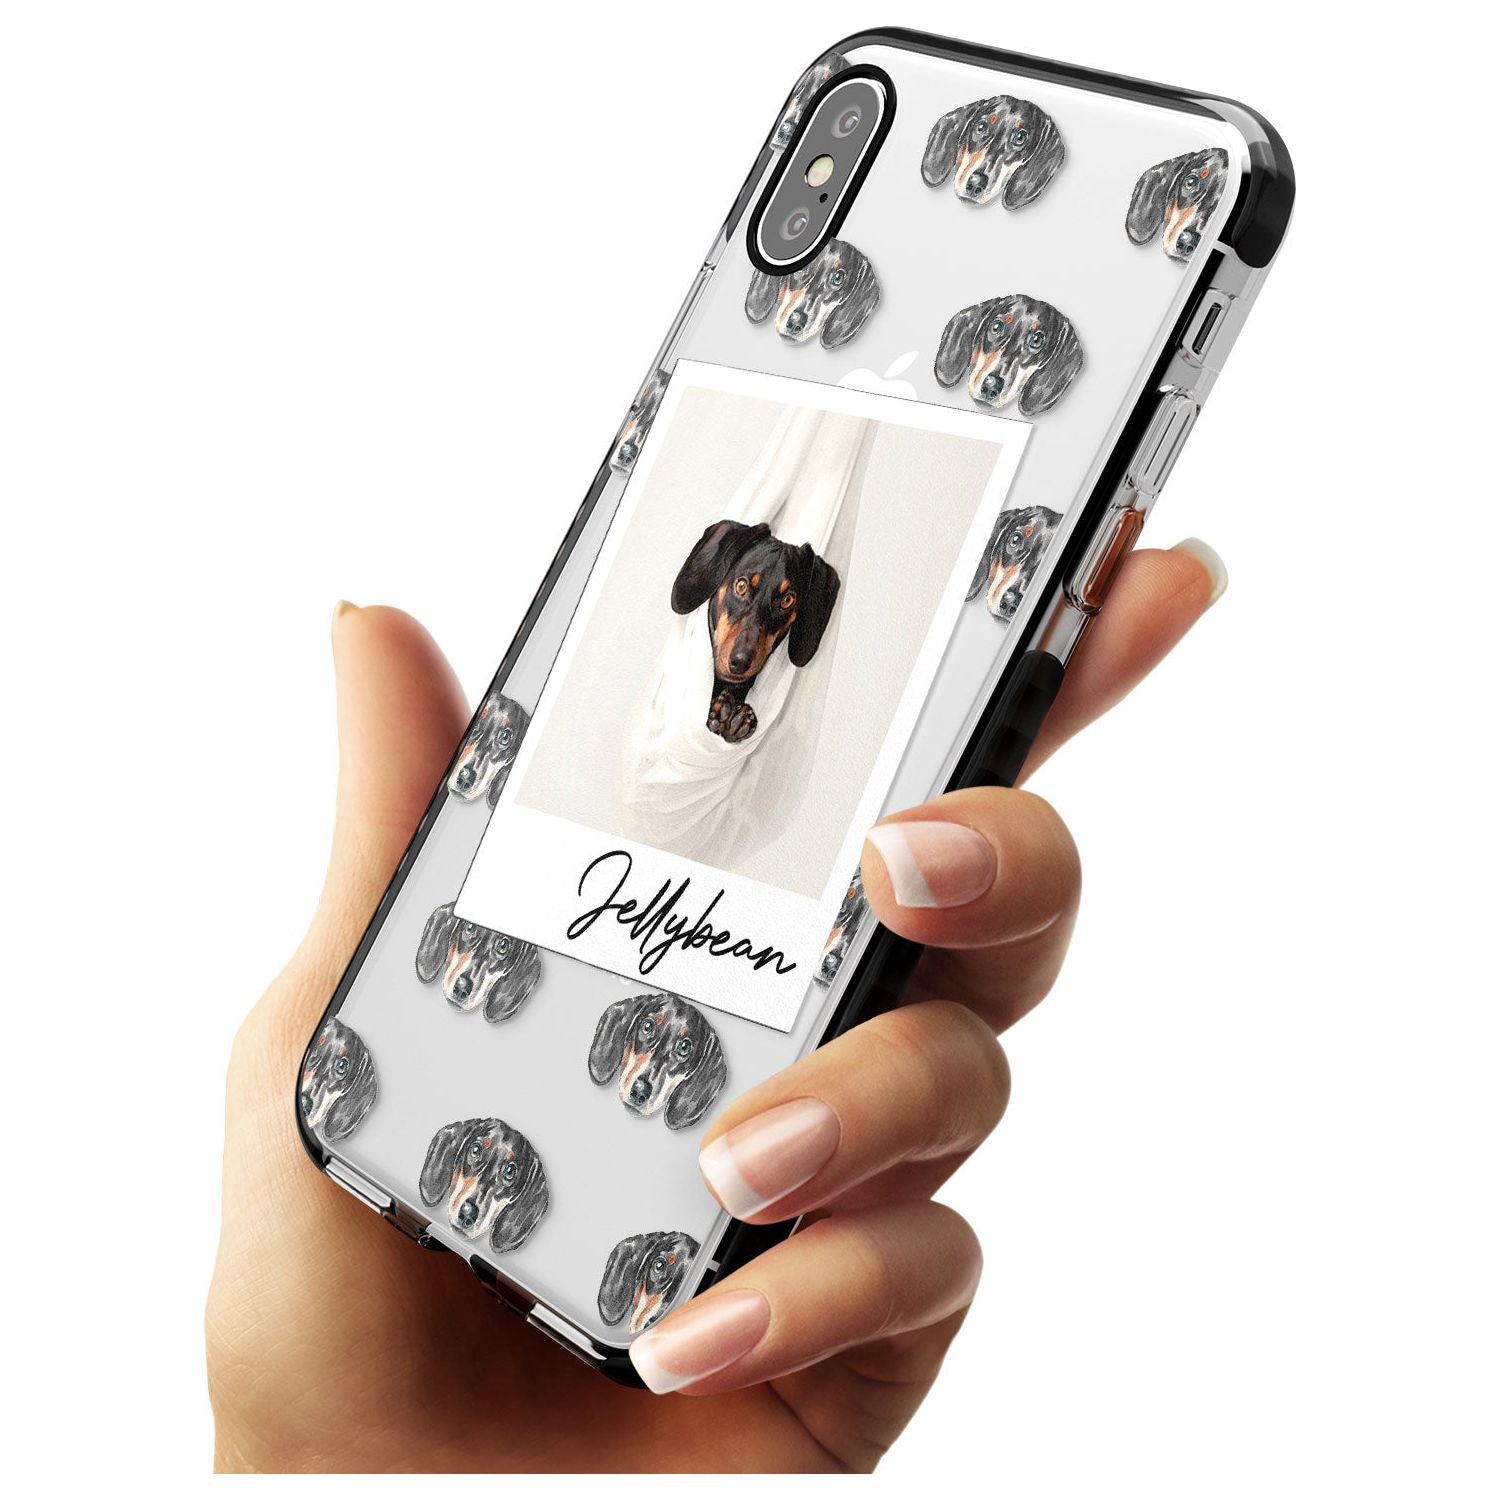 Dachshund, Black- Custom Dog Photo Pink Fade Impact Phone Case for iPhone X XS Max XR